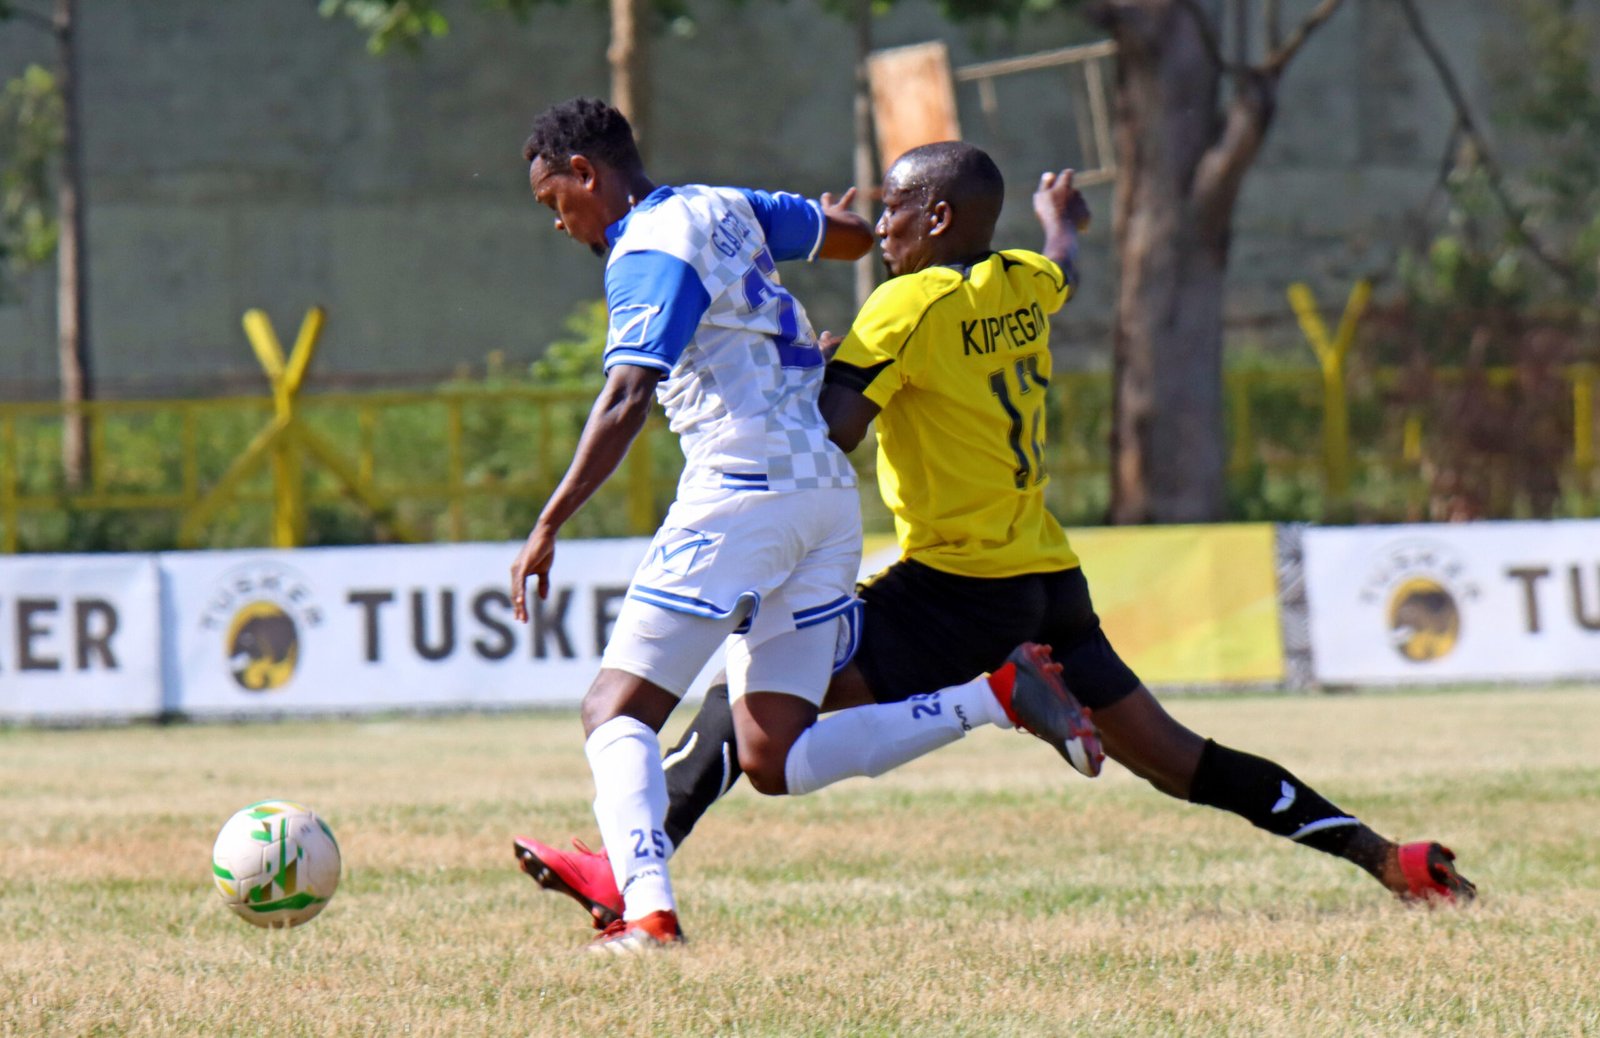 Tusker FC beats Bidco United